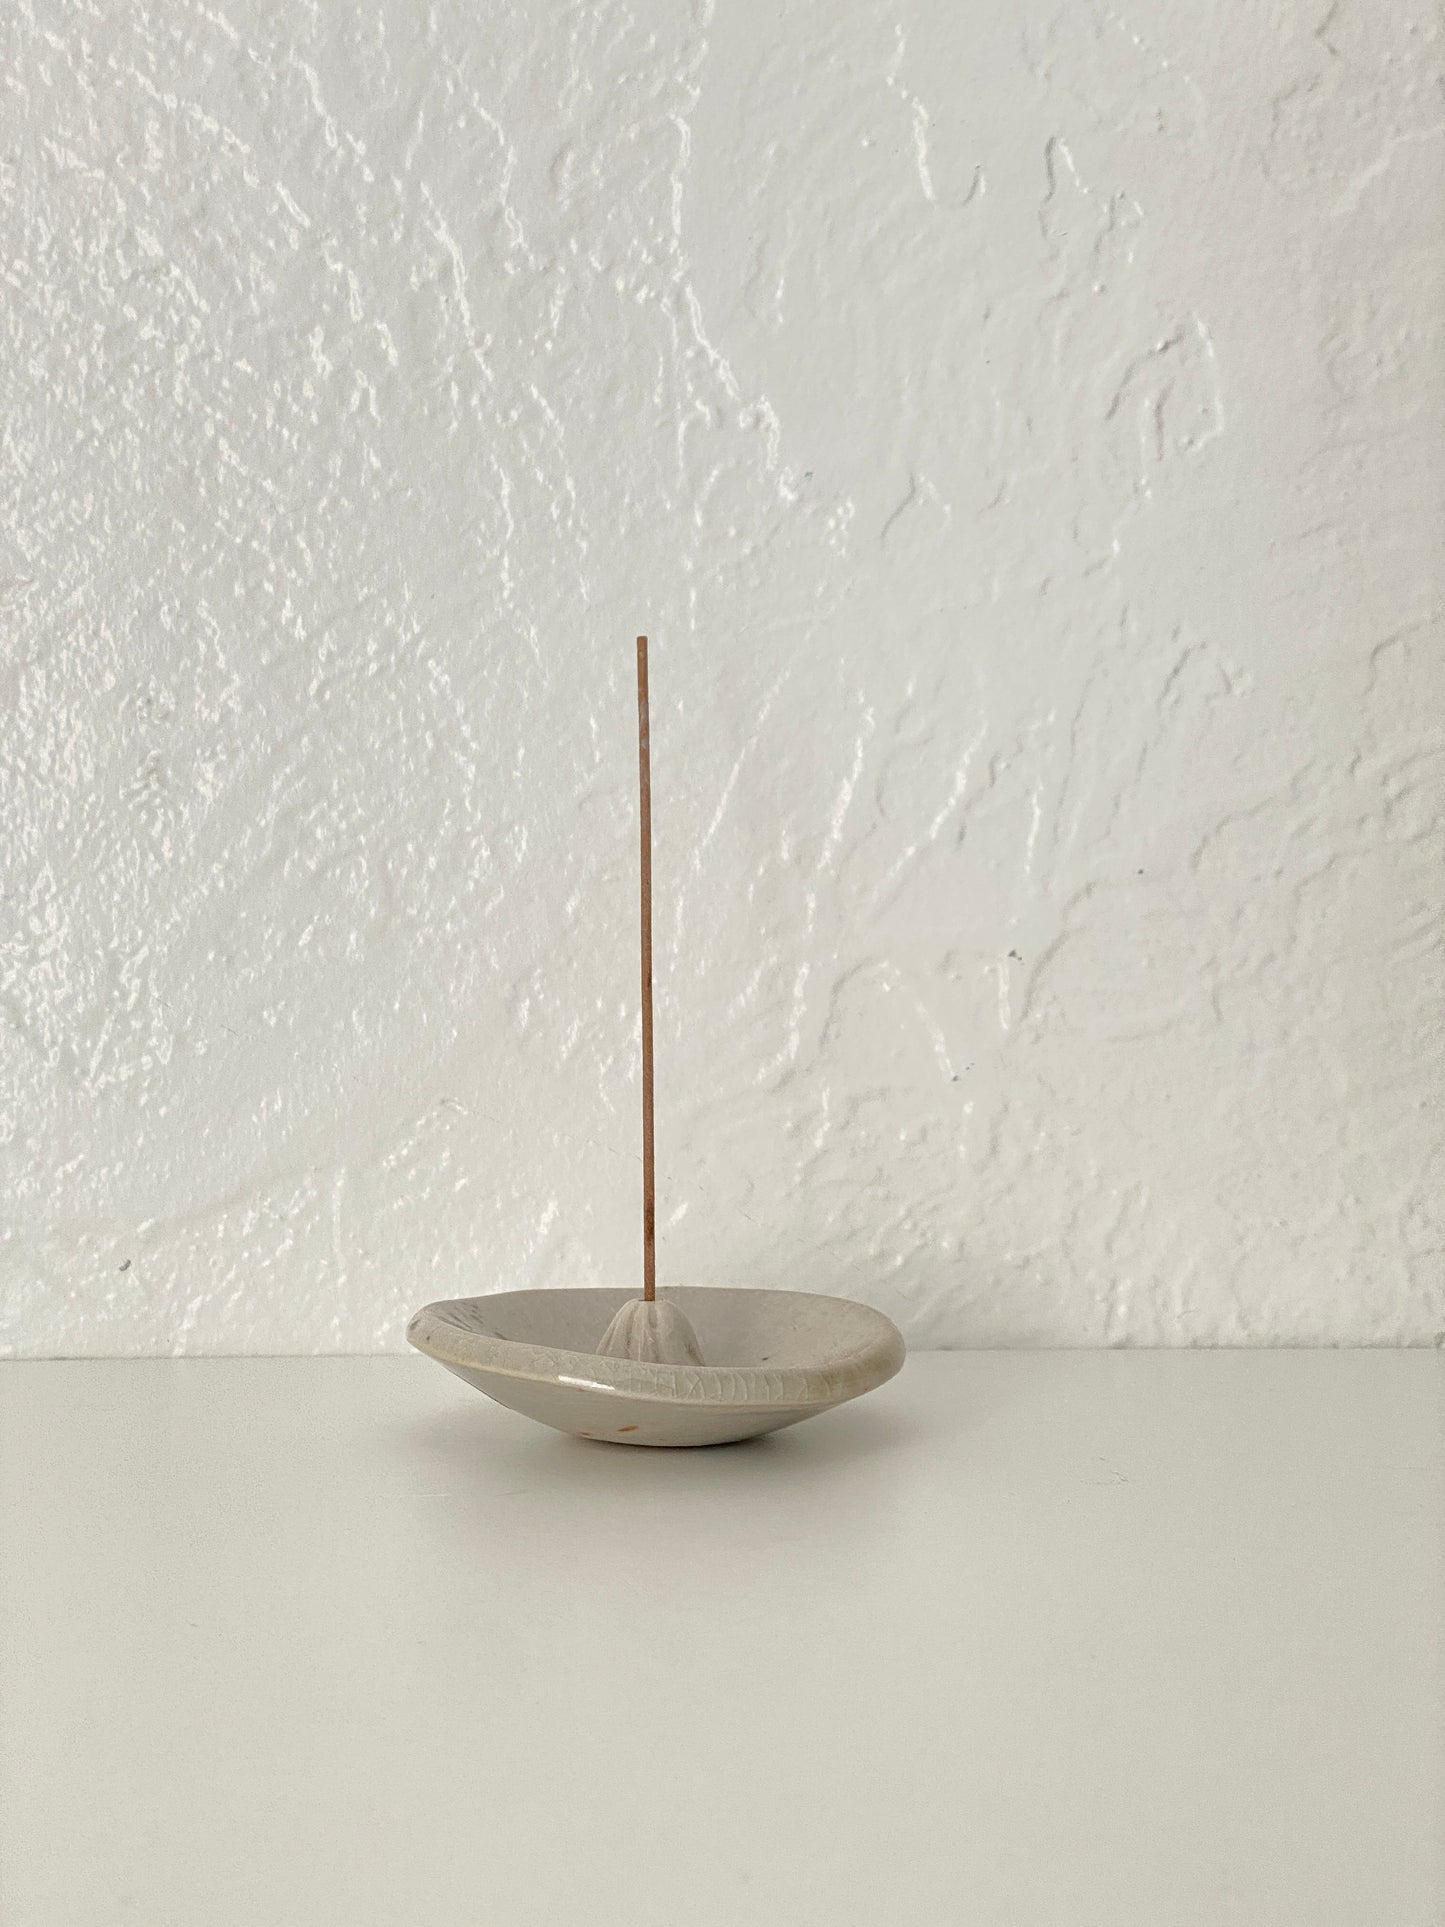 shino fired porcelain incense burner - #1